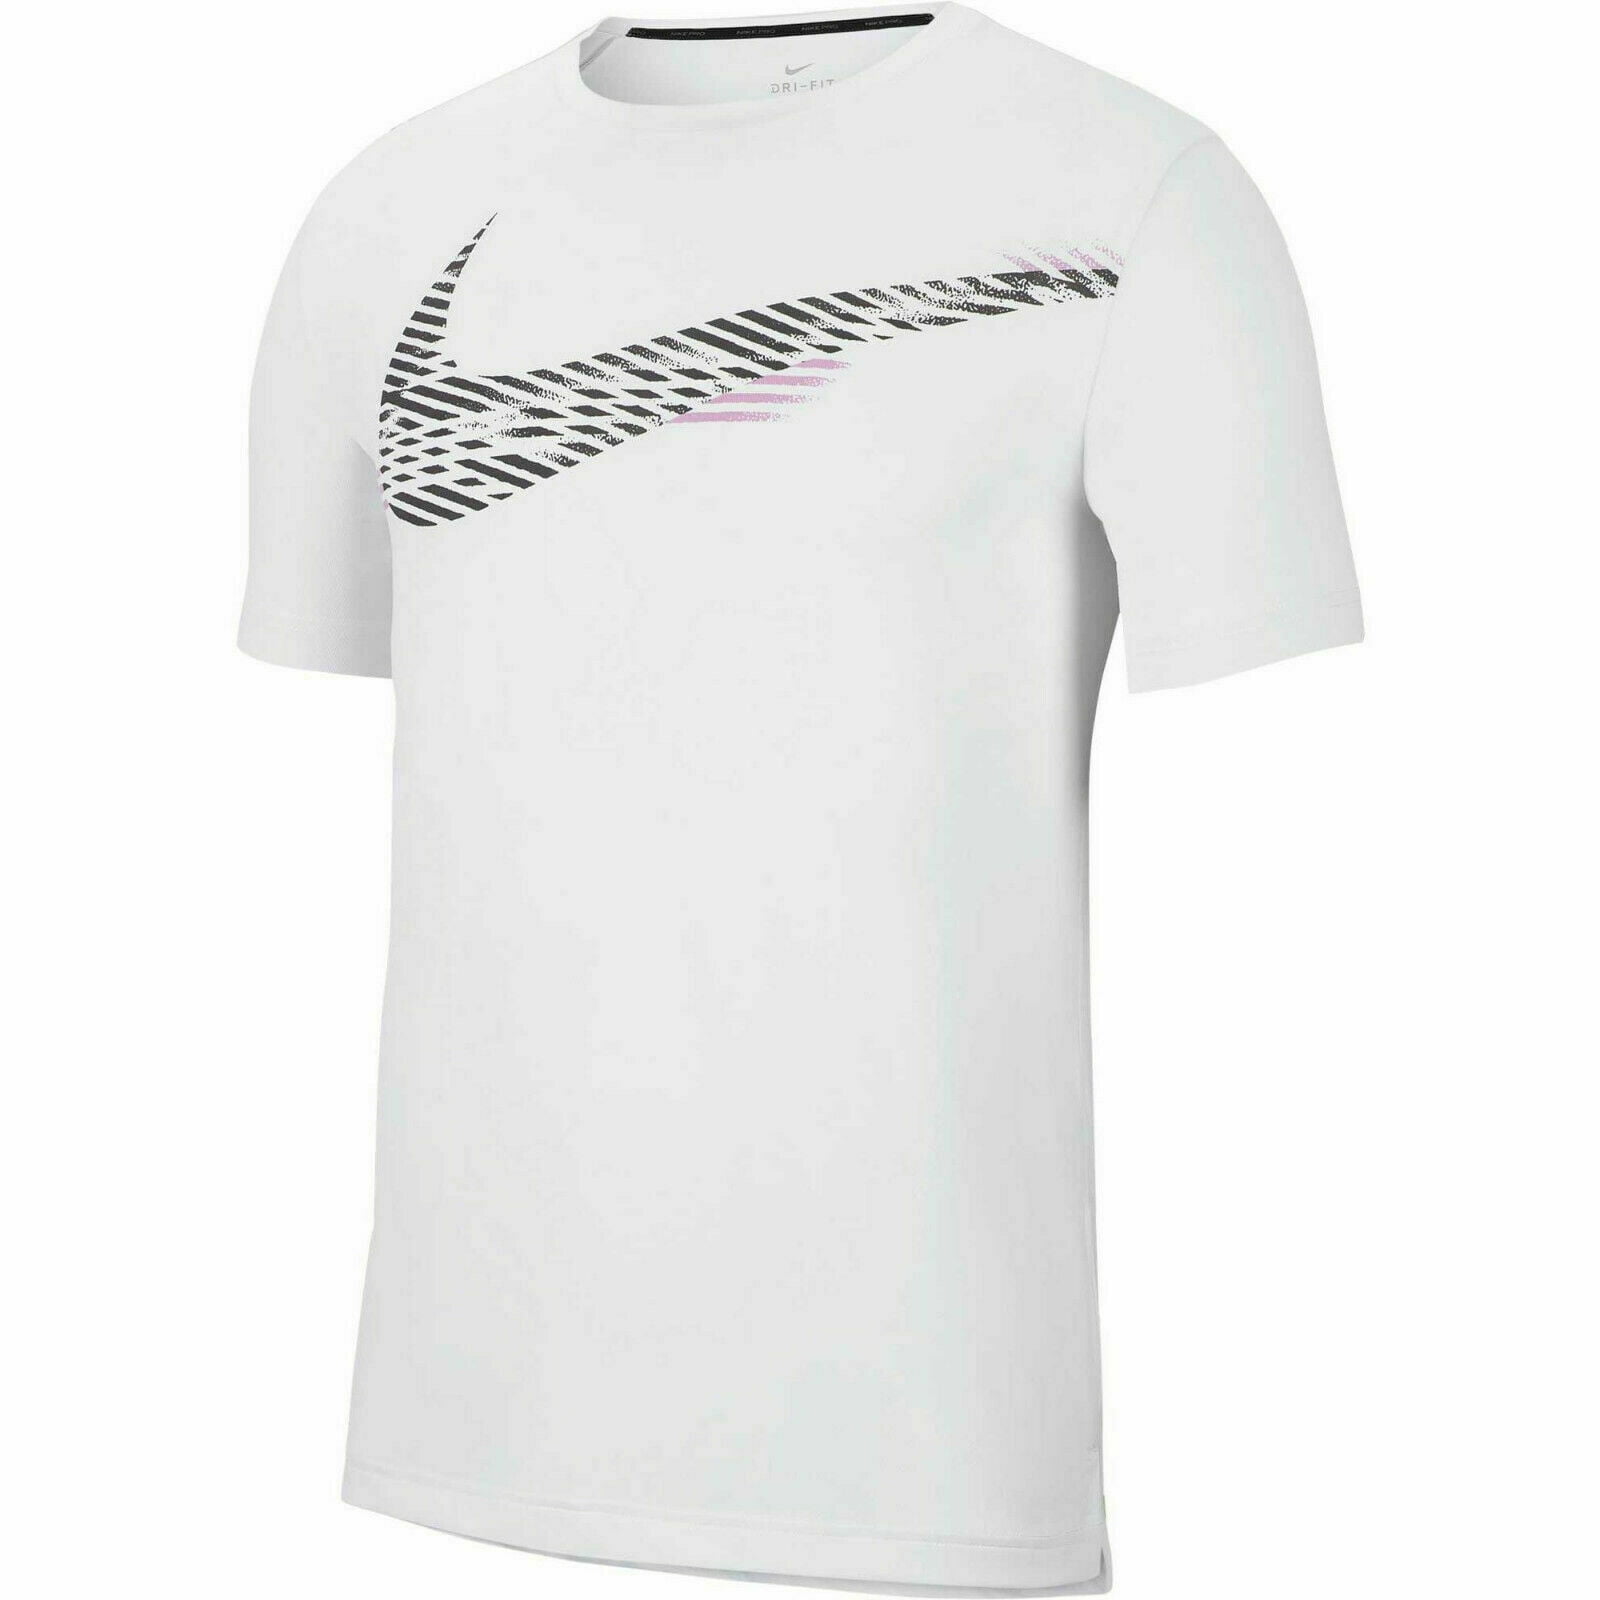 Nike Pro Breathe Short Sleeve Running Shirt Size M Walmart.com